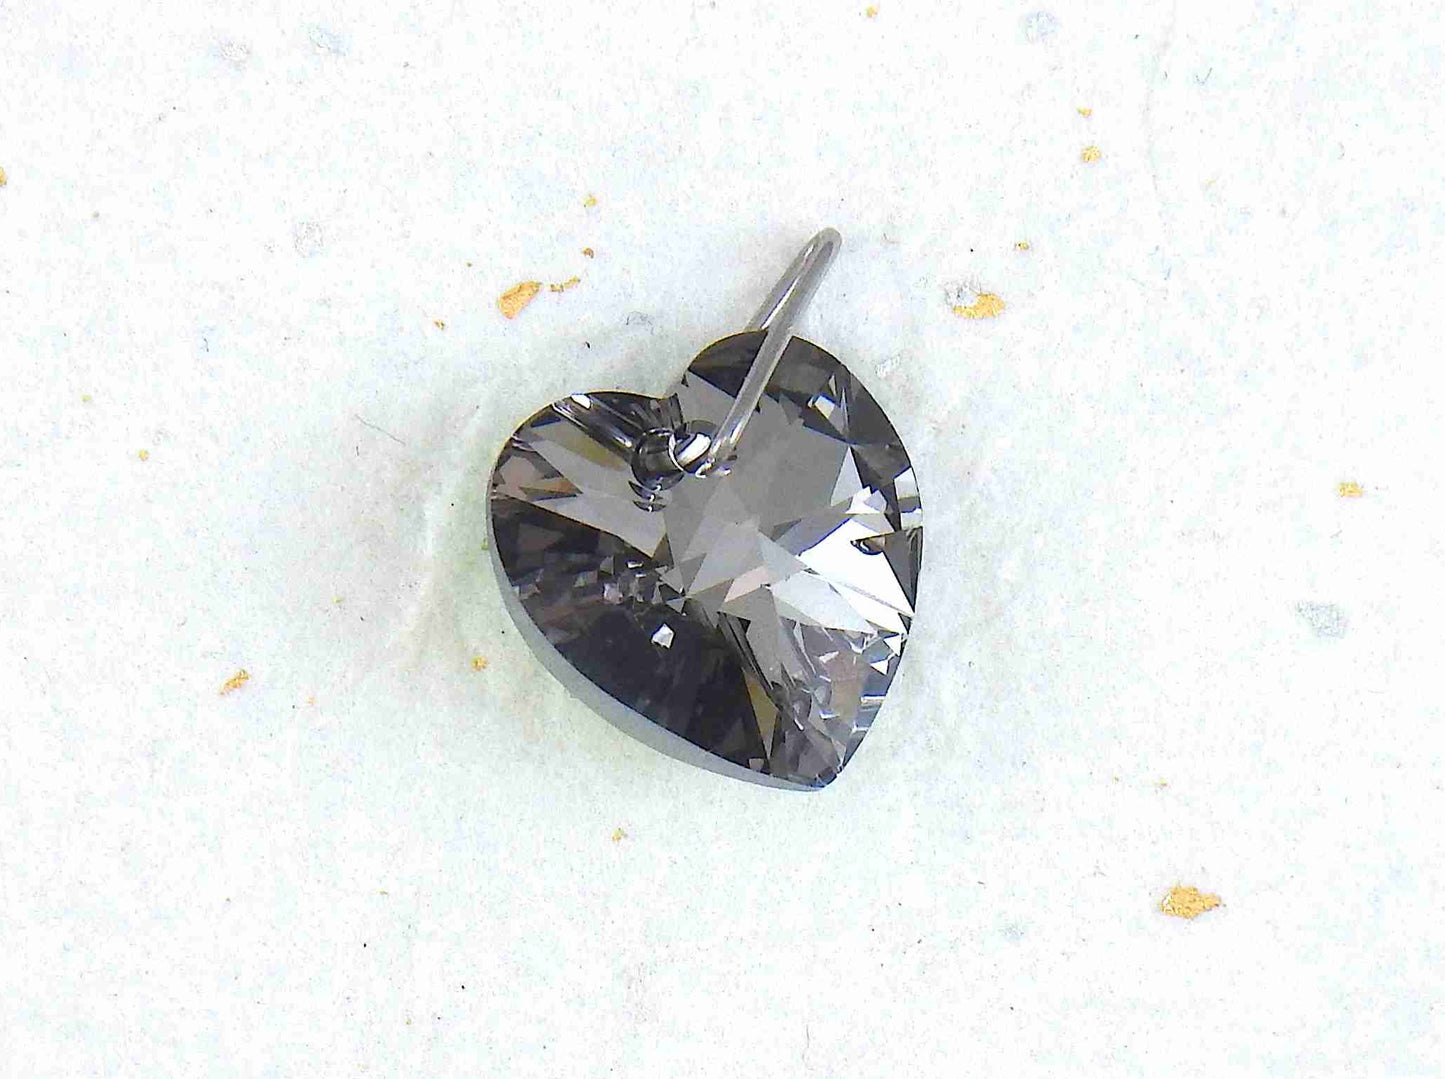 Collier 14/16 po à pendentif coeur de cristal Swarovski 14mm Scarabeus Green (vert scarabée), chaîne acier inoxydable